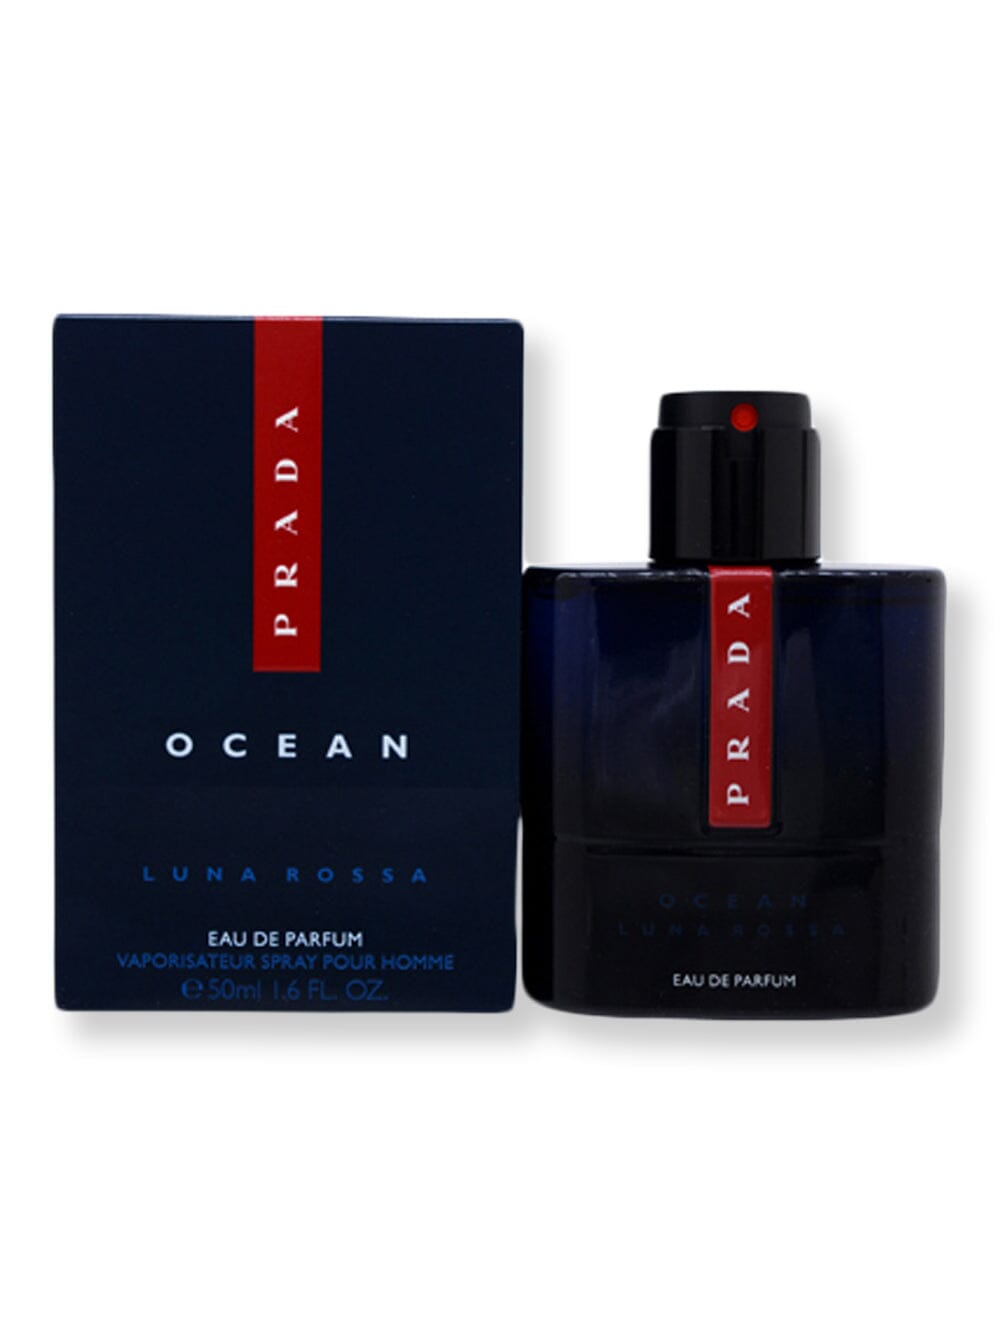 Prada Prada Luna Rossa Ocean EDP Spray 1.7 oz50 ml Perfume 